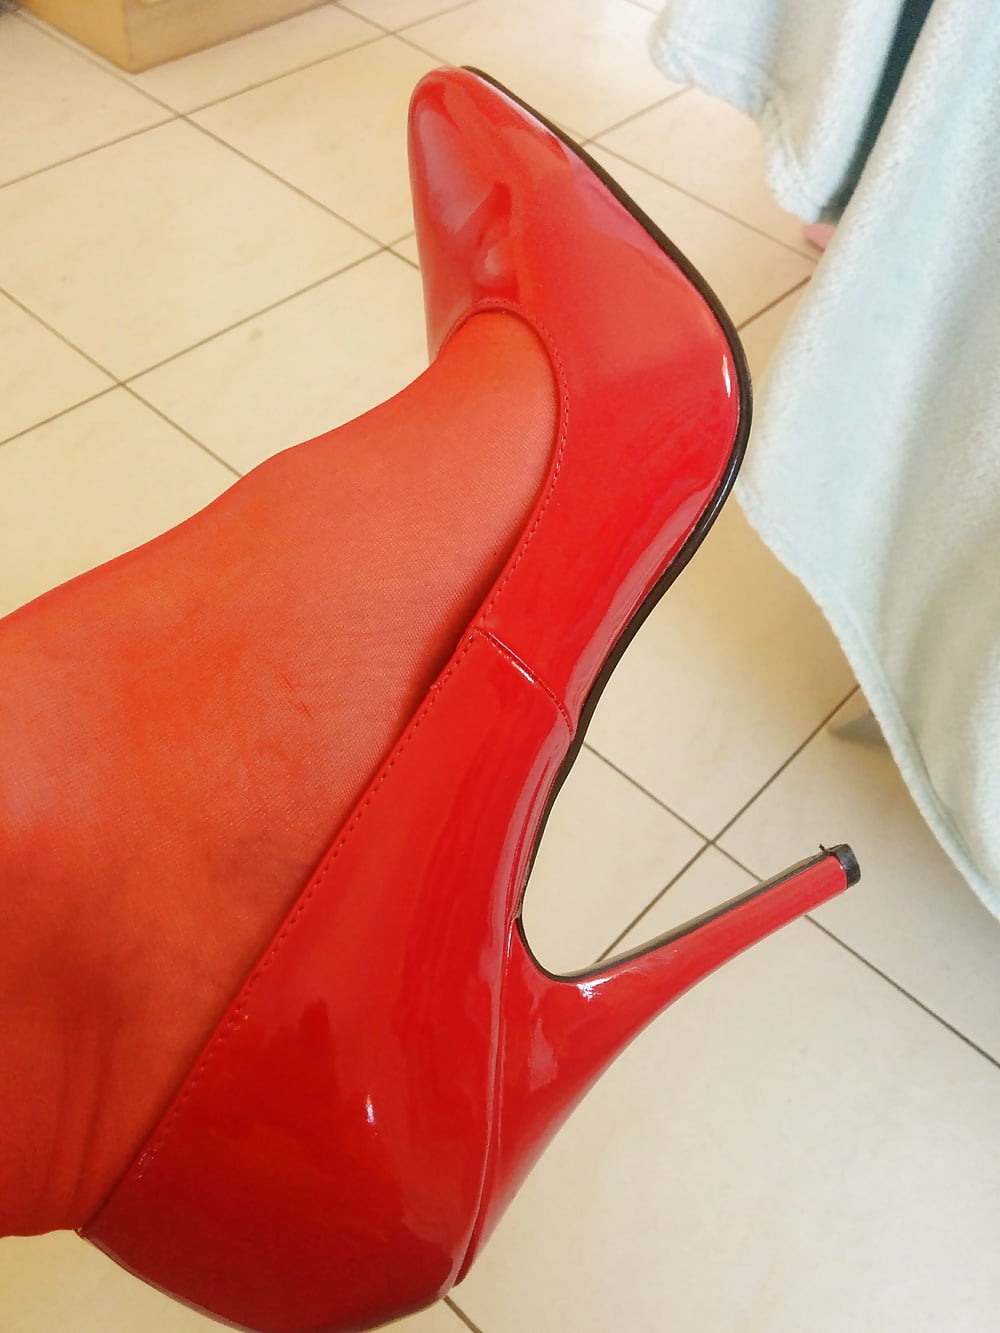 New heels: Red 6&#039; Pump Shoe. Like? #106673997